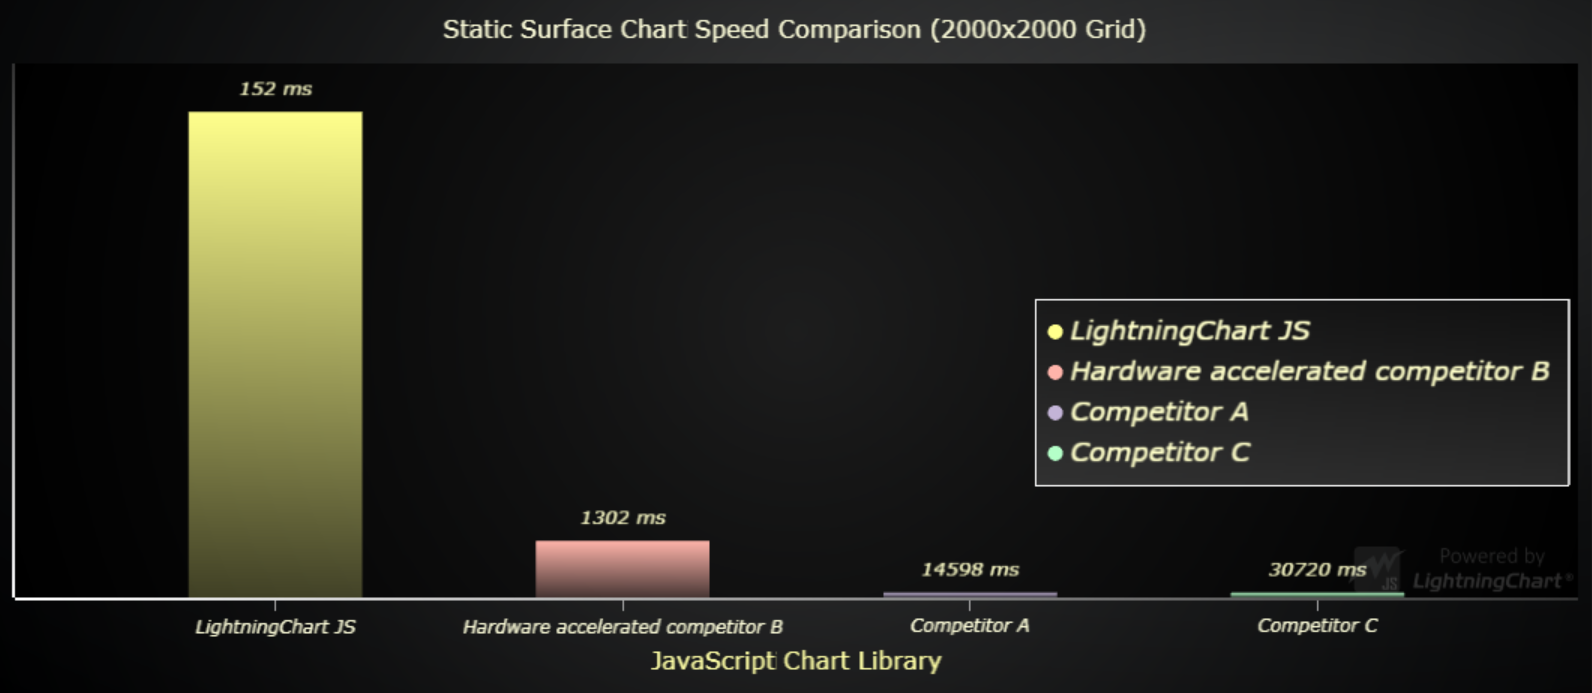 Surface-charts-performance-comparison-visualization-static-2000x2000